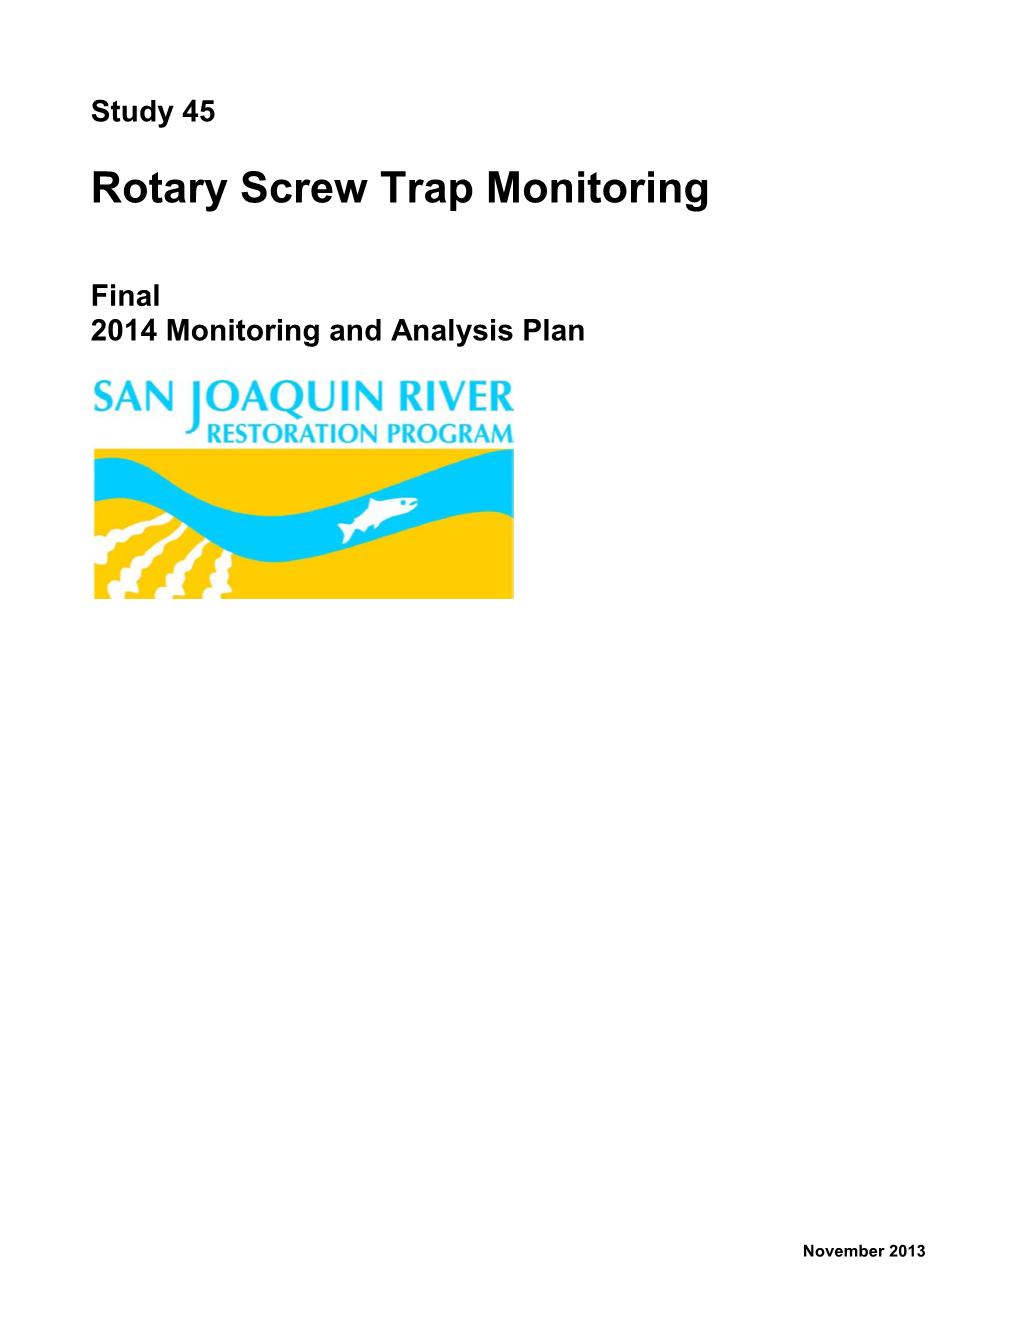 Rotary Screw Trap Monitoring